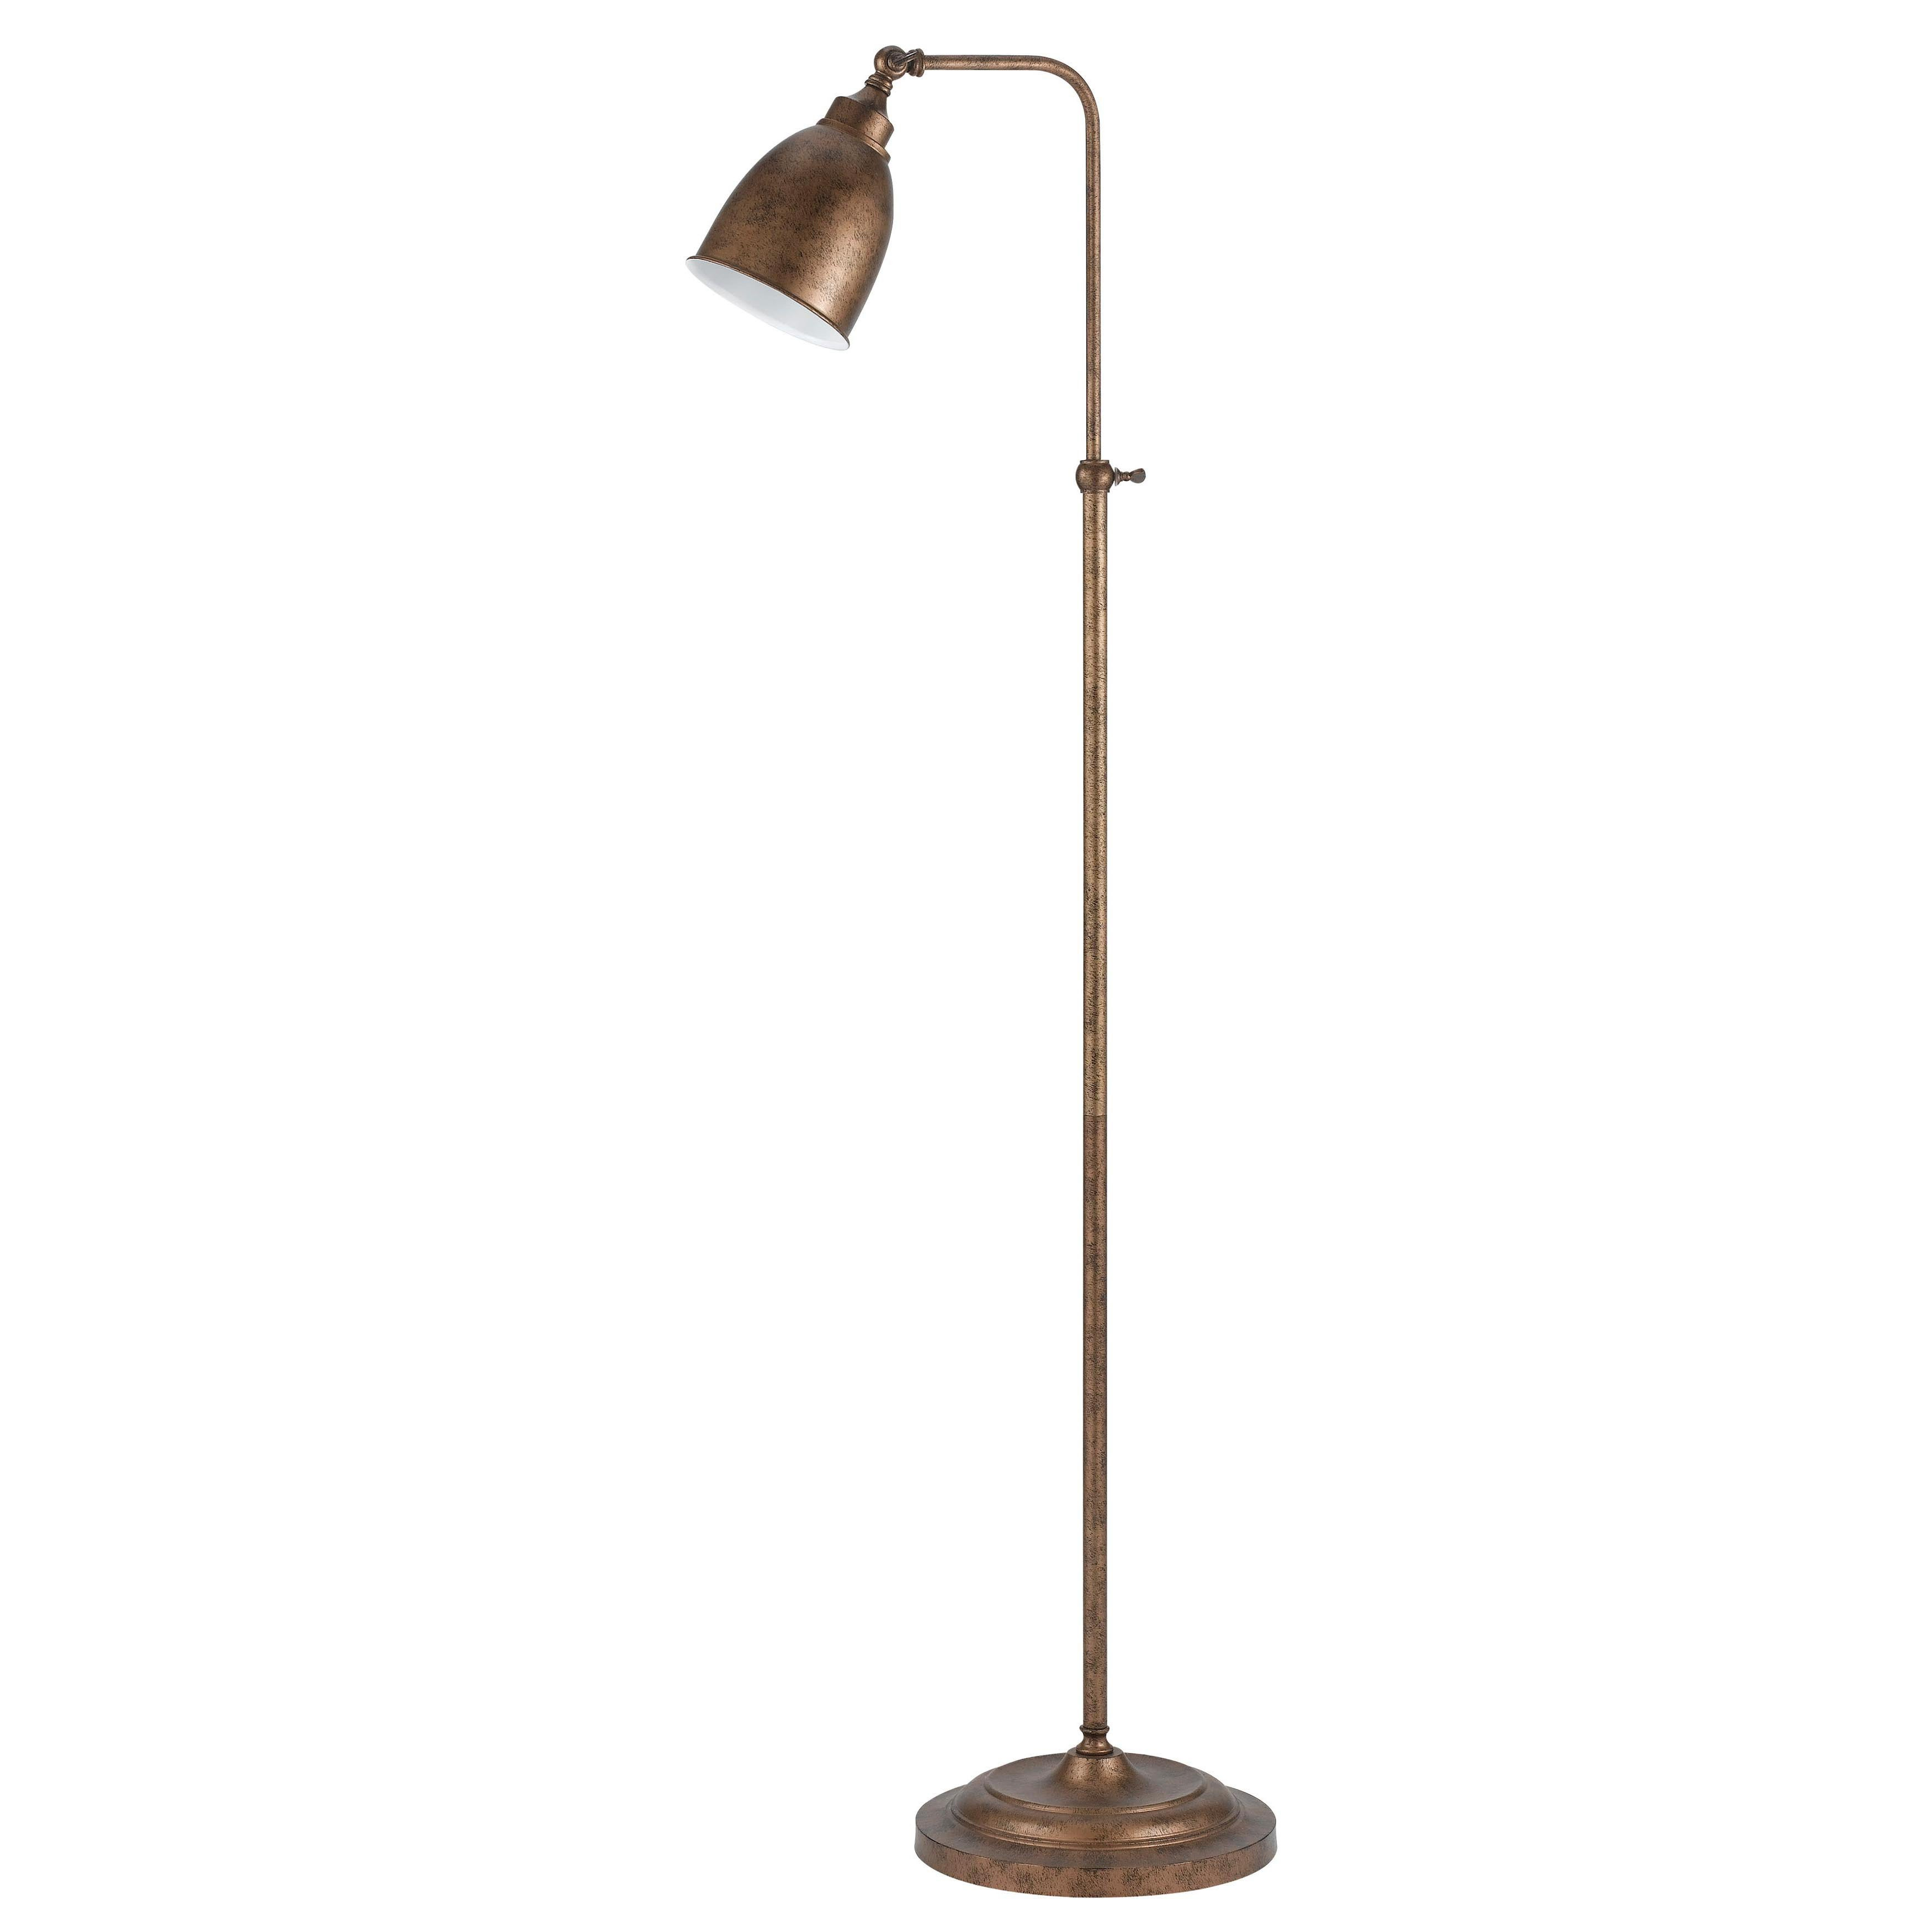 Cal Lighting B0 2032fl Pharmarcy Pole Floor Lamp with regard to dimensions 3500 X 3500